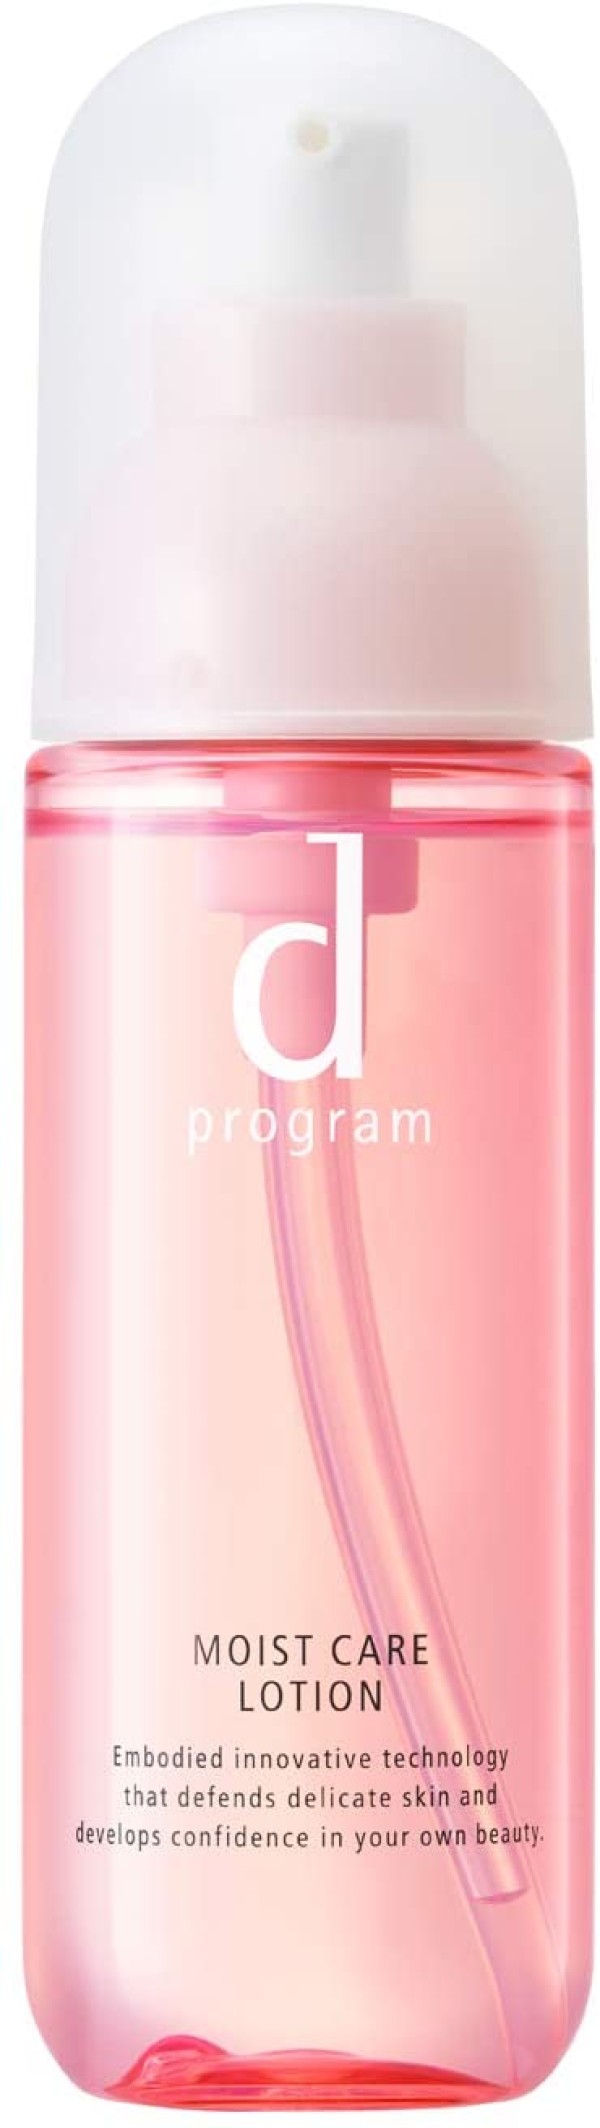 Лосьон для сухой кожи Shiseido D Program Moist Care Lotion